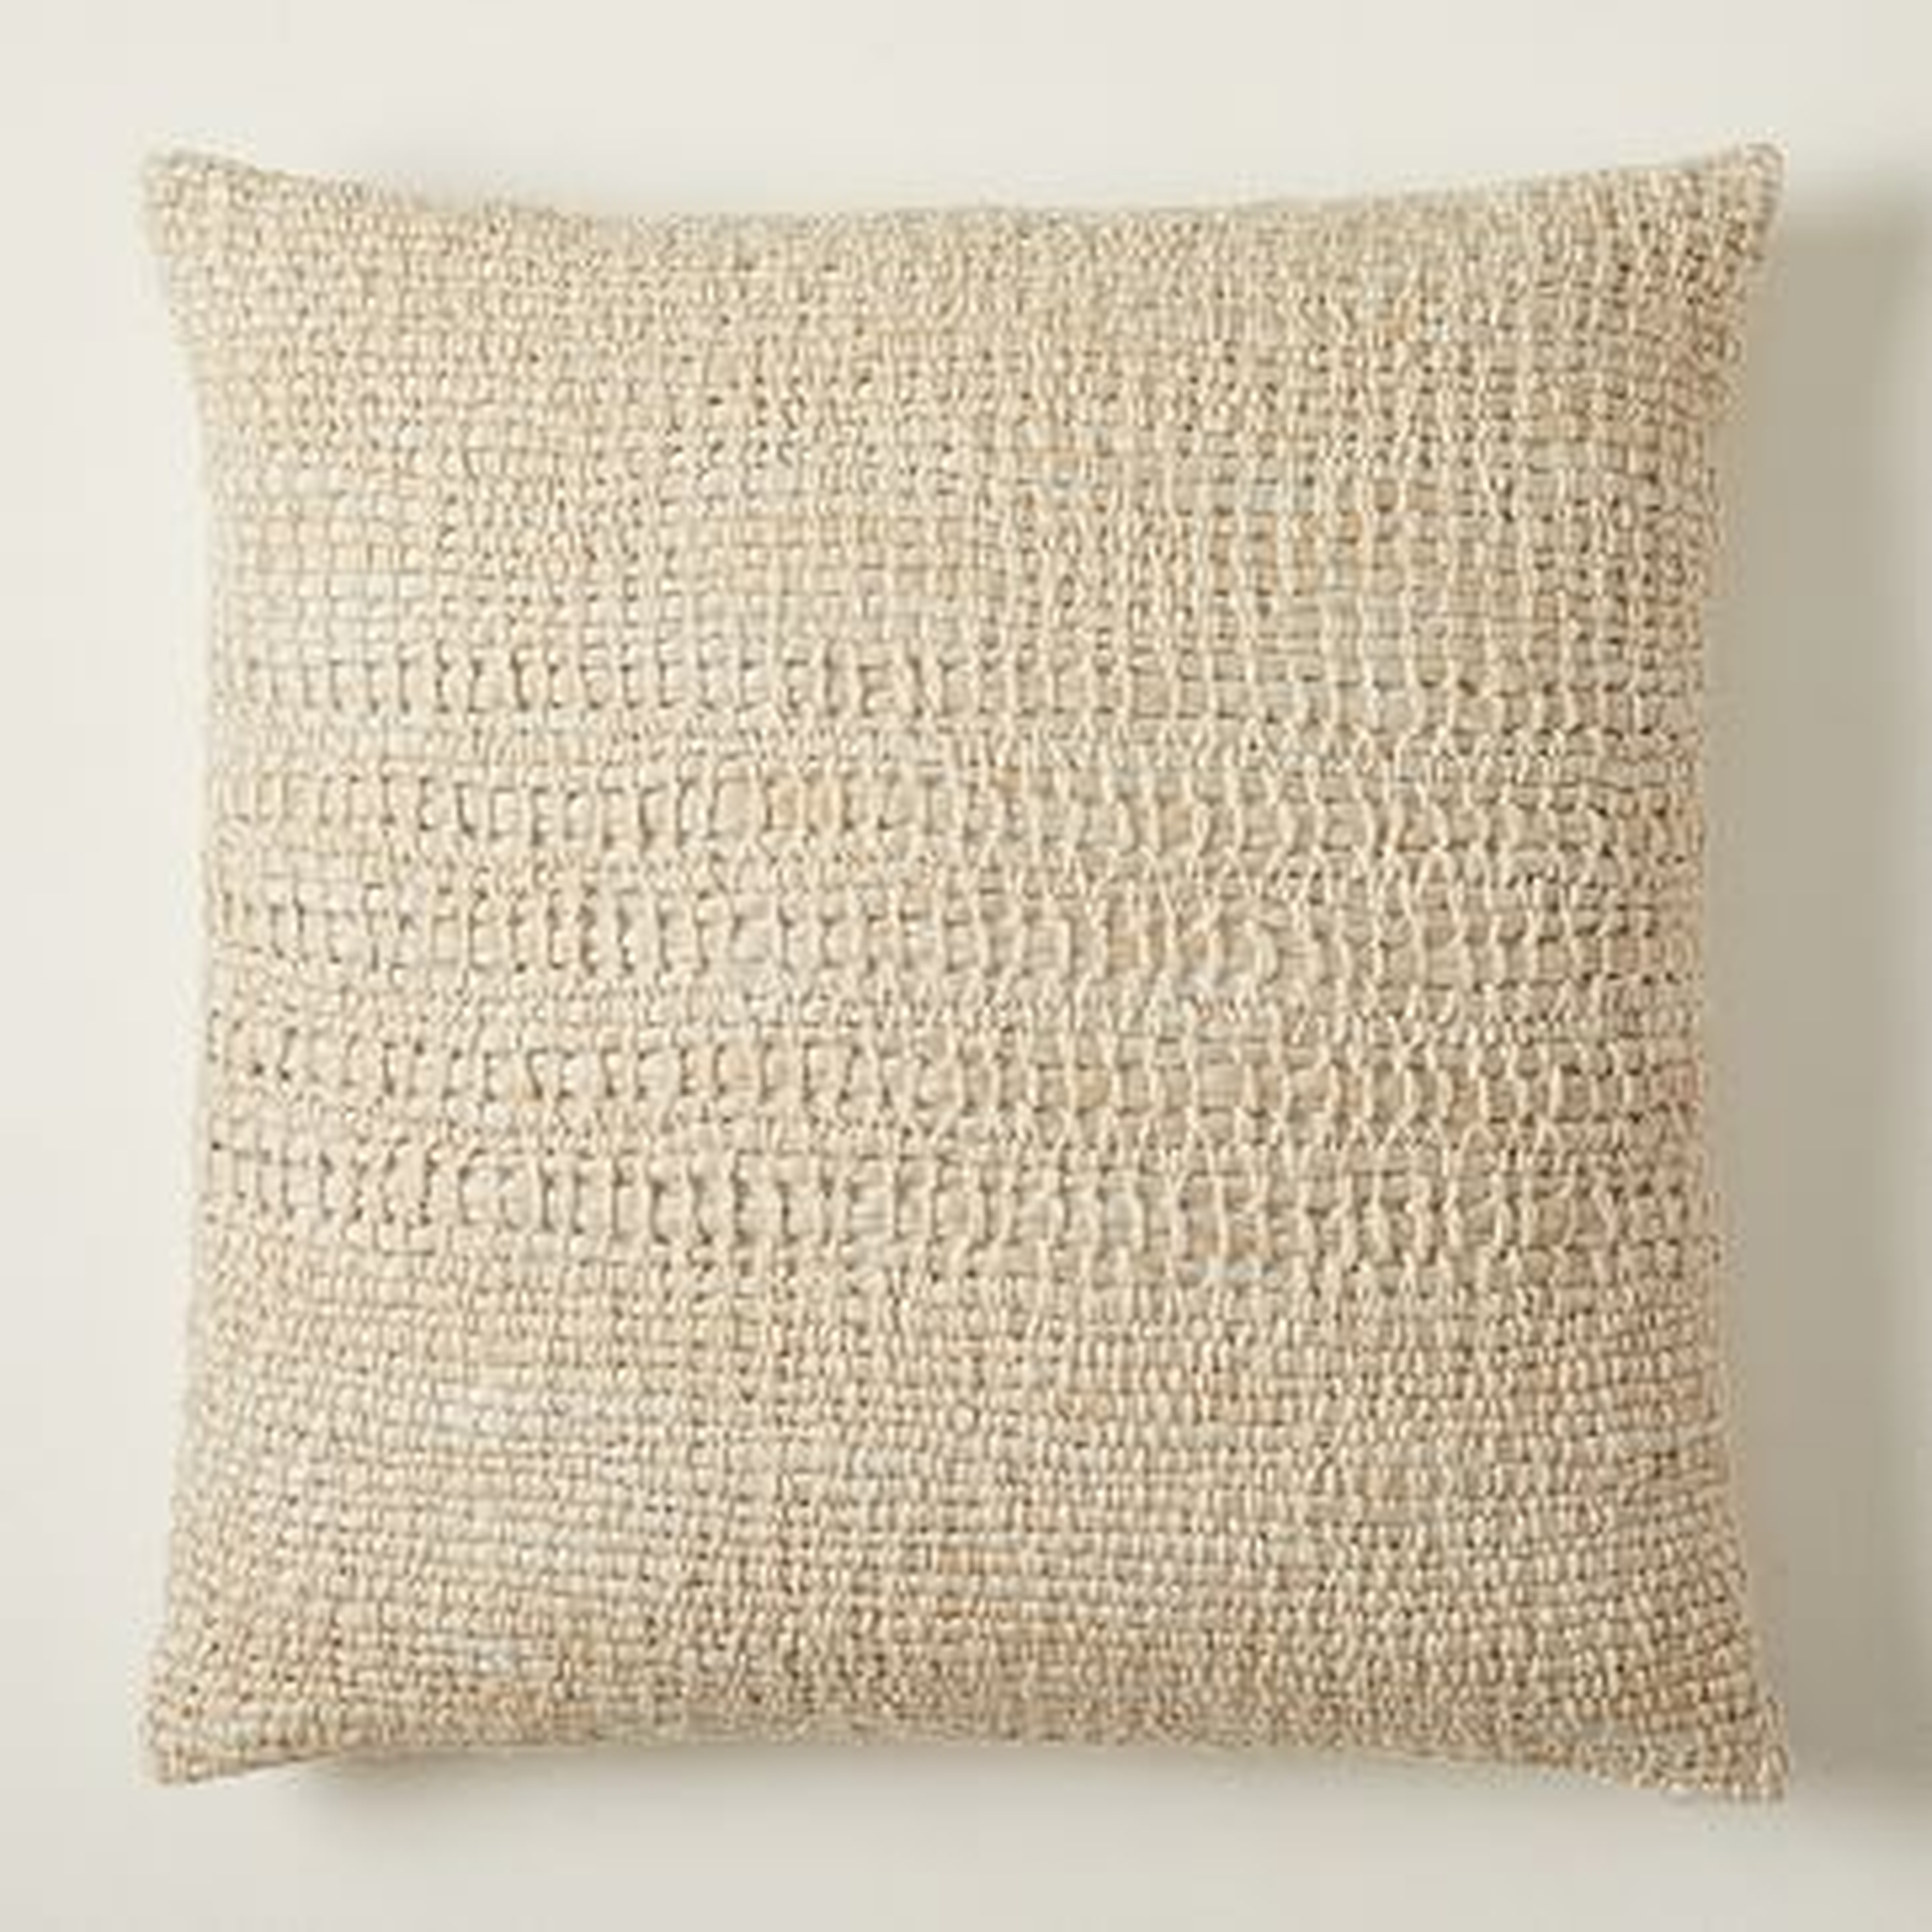 Cozy Weave Pillow Cover, 24"x24", Natural - West Elm